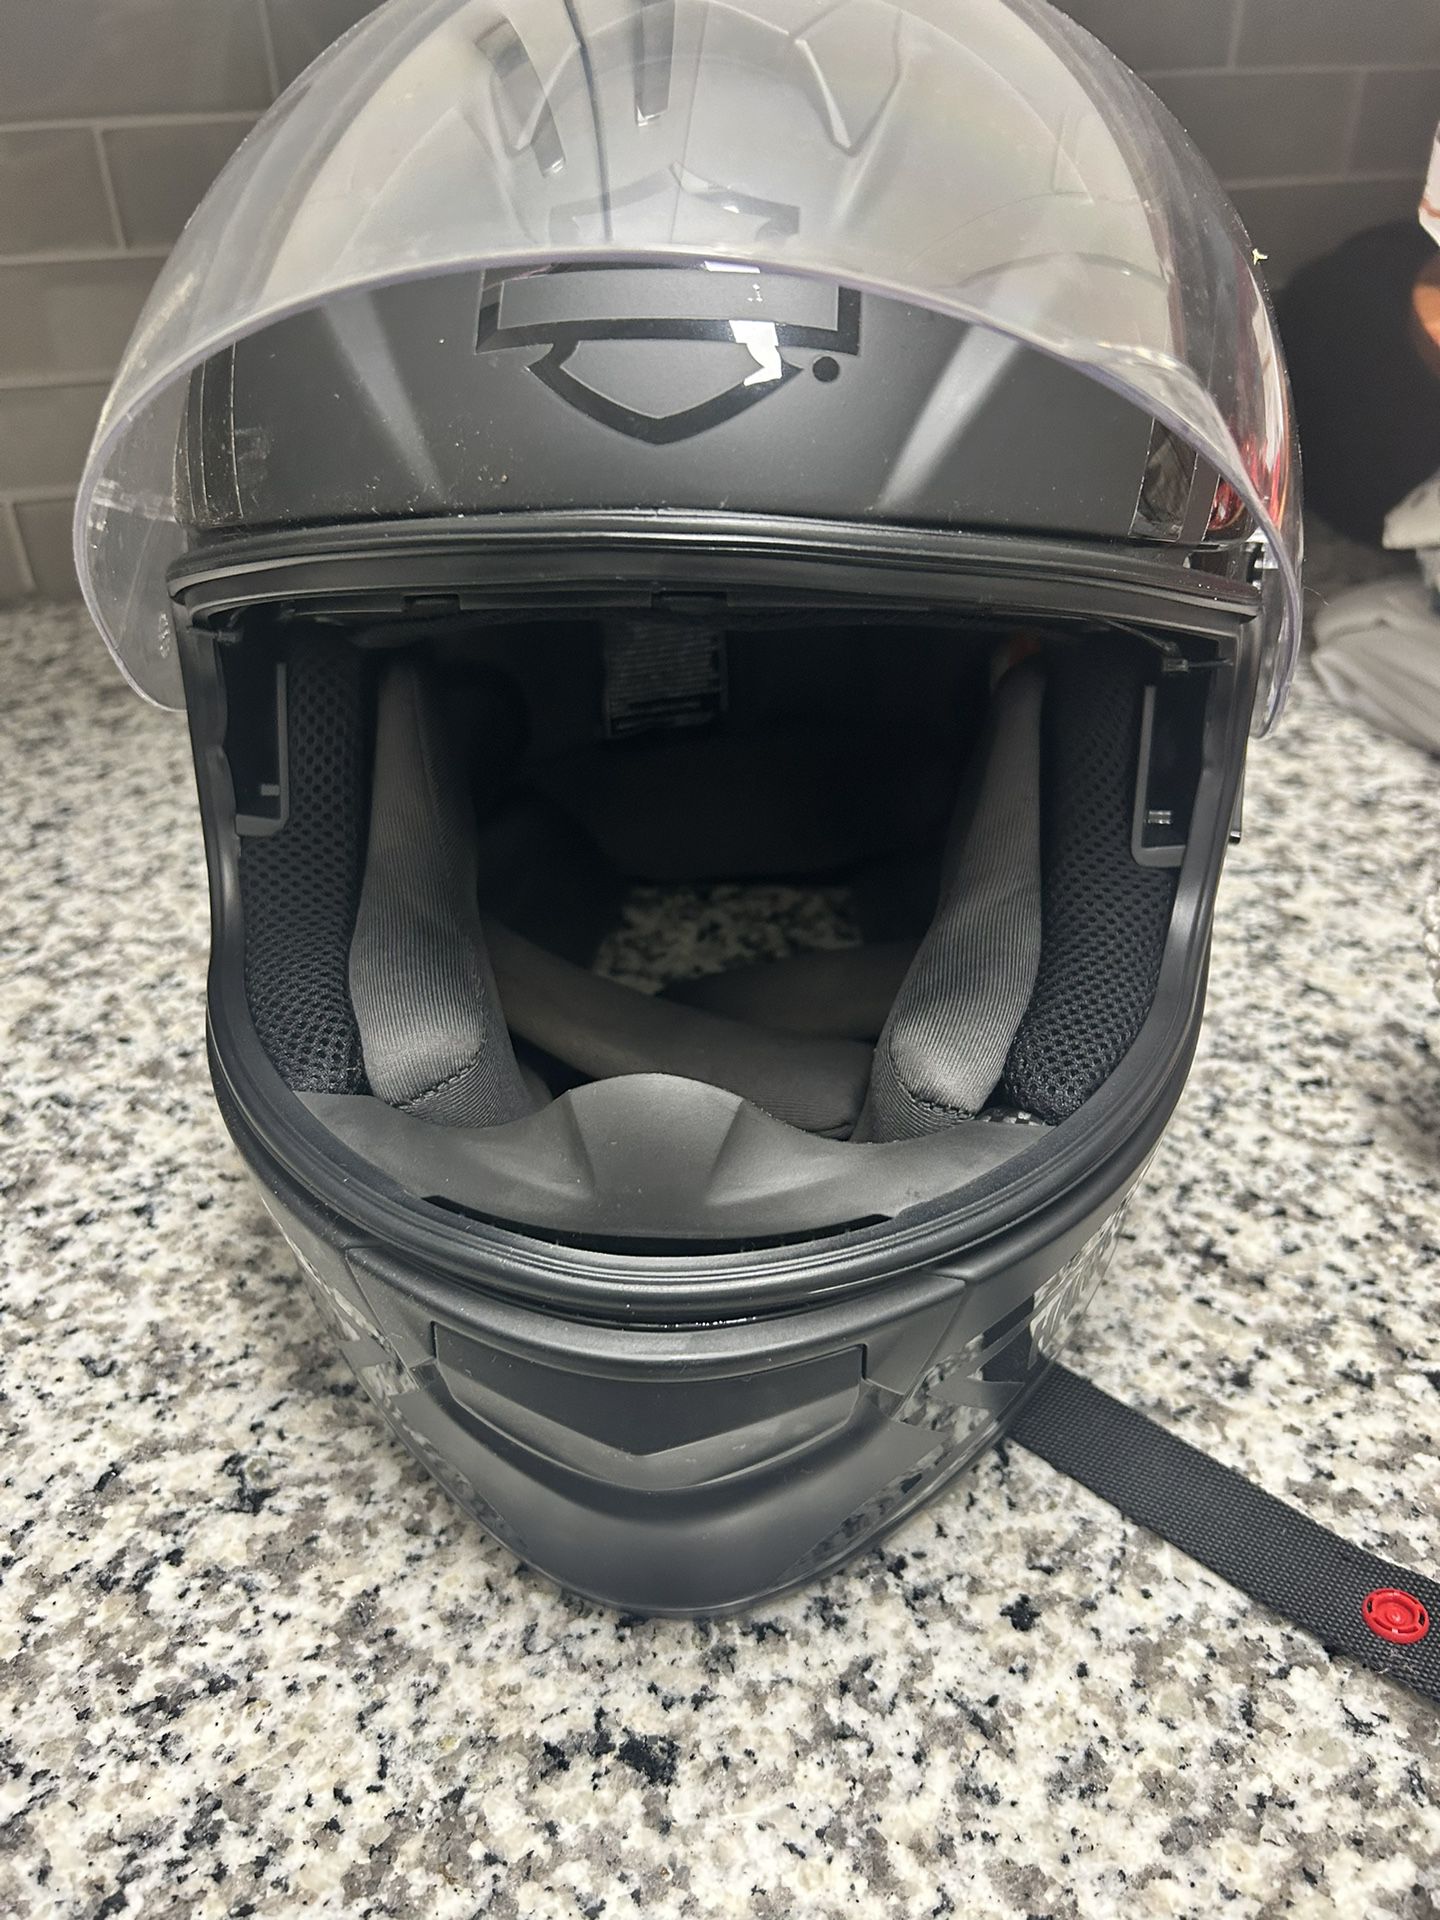 Harley Helmet and Gloves